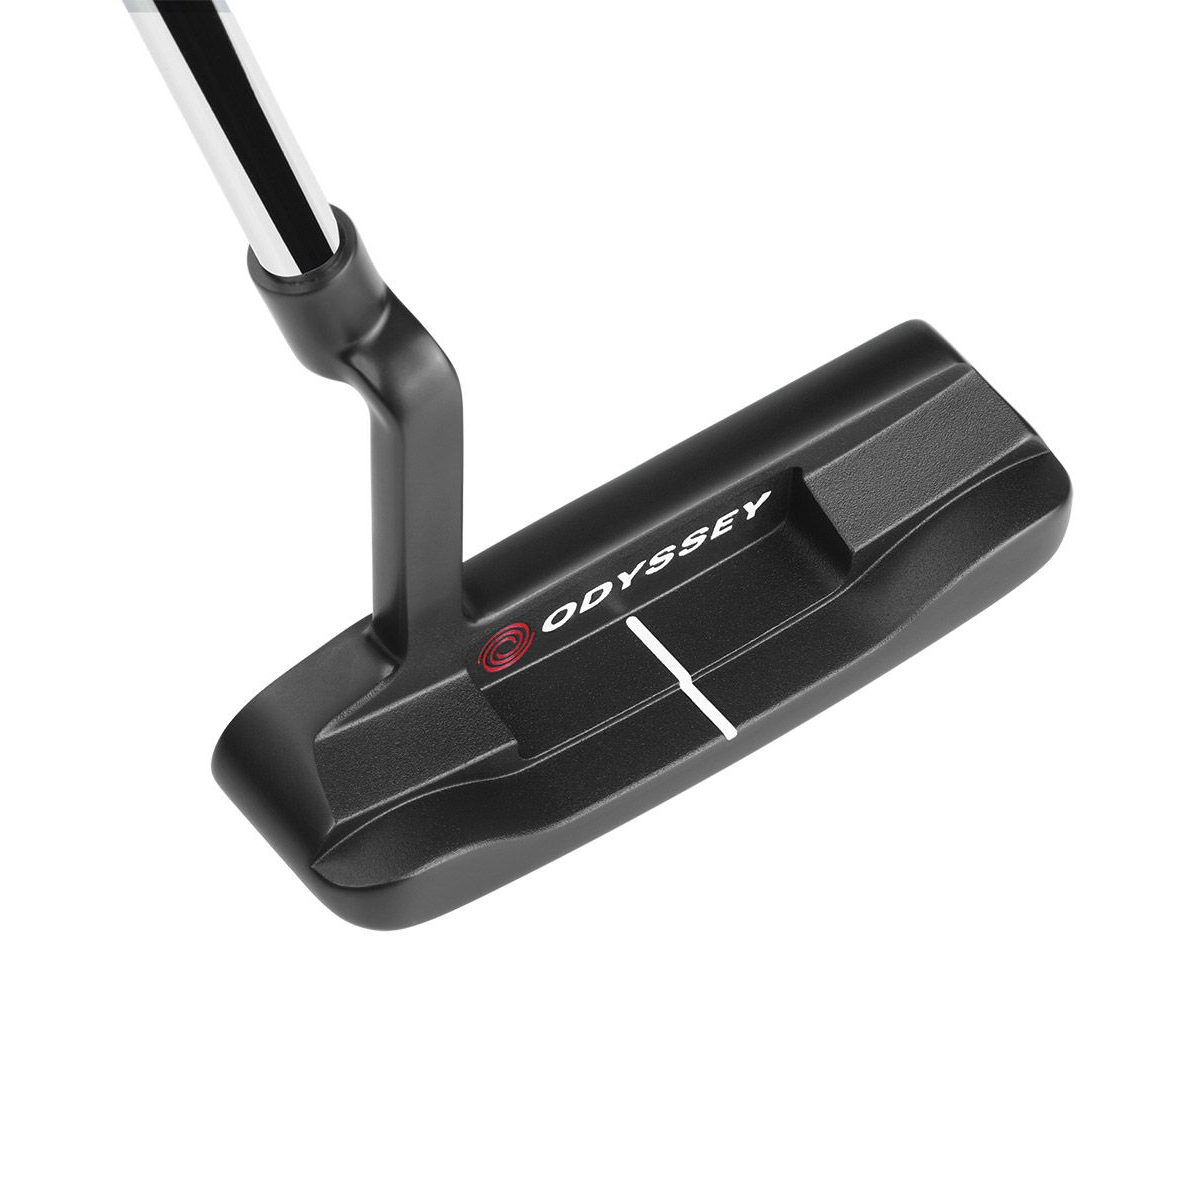 Odyssey O-Works Black 1 Golf Putter from american golf